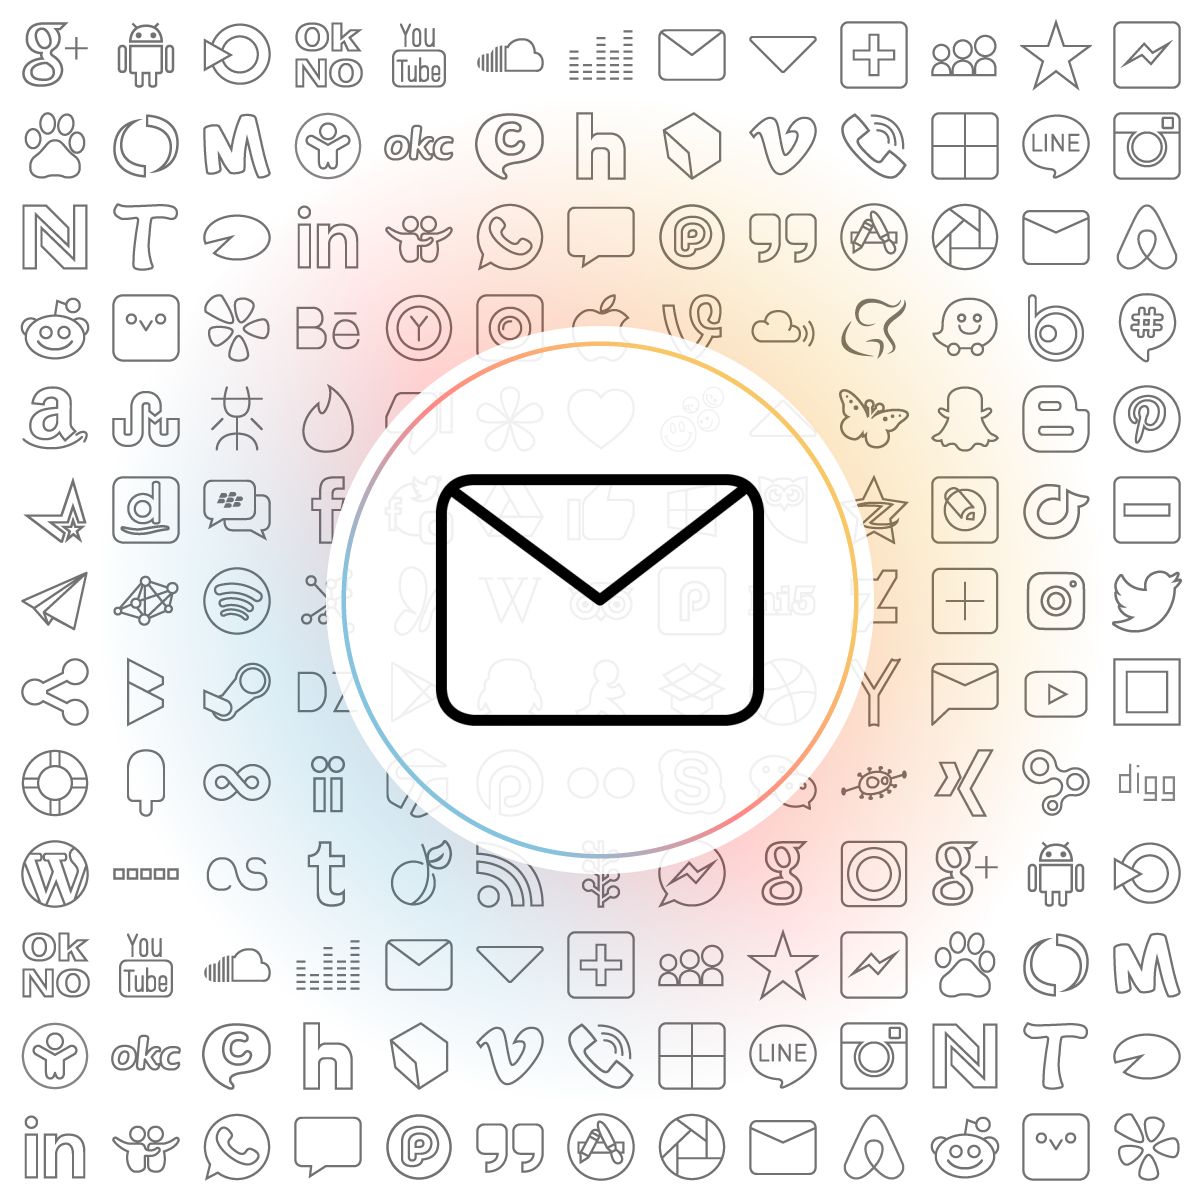 Gmail Icons - Iconshock